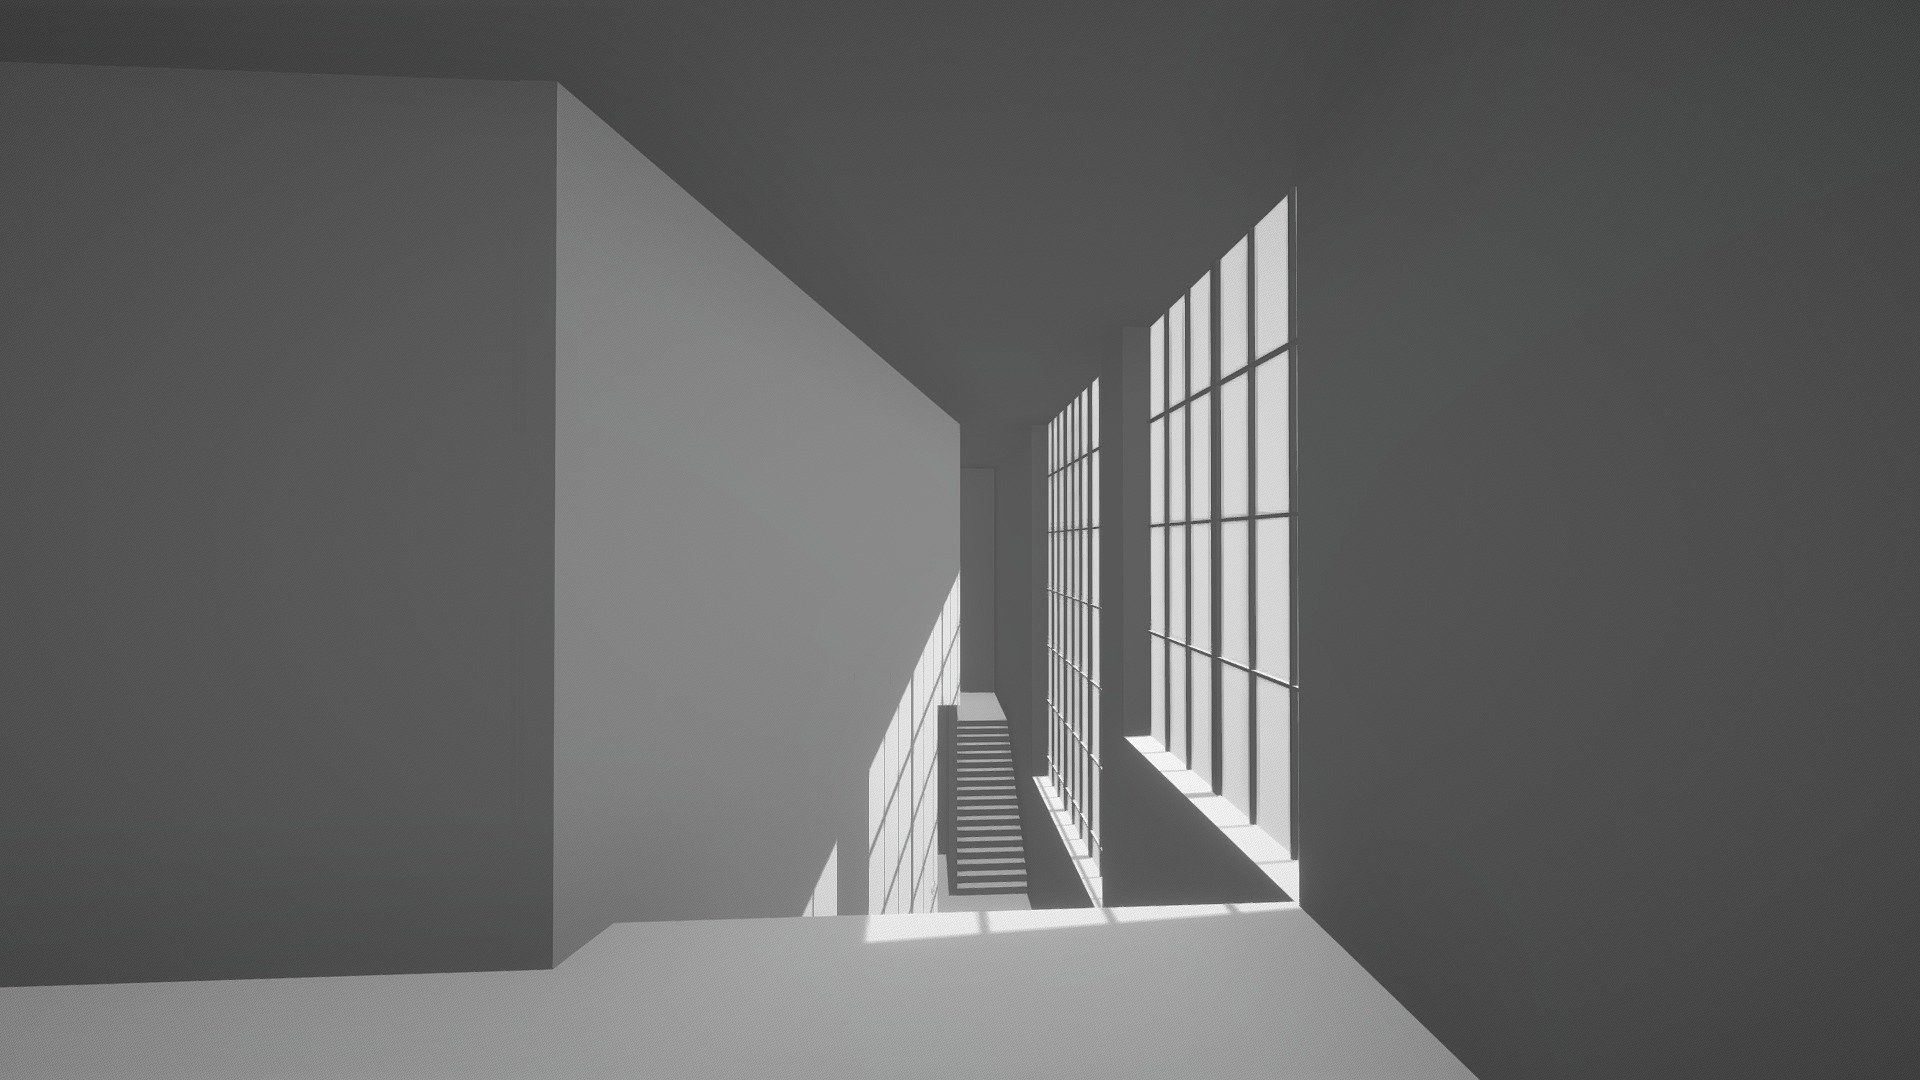 Entwurf Stairways - Rouven Ries